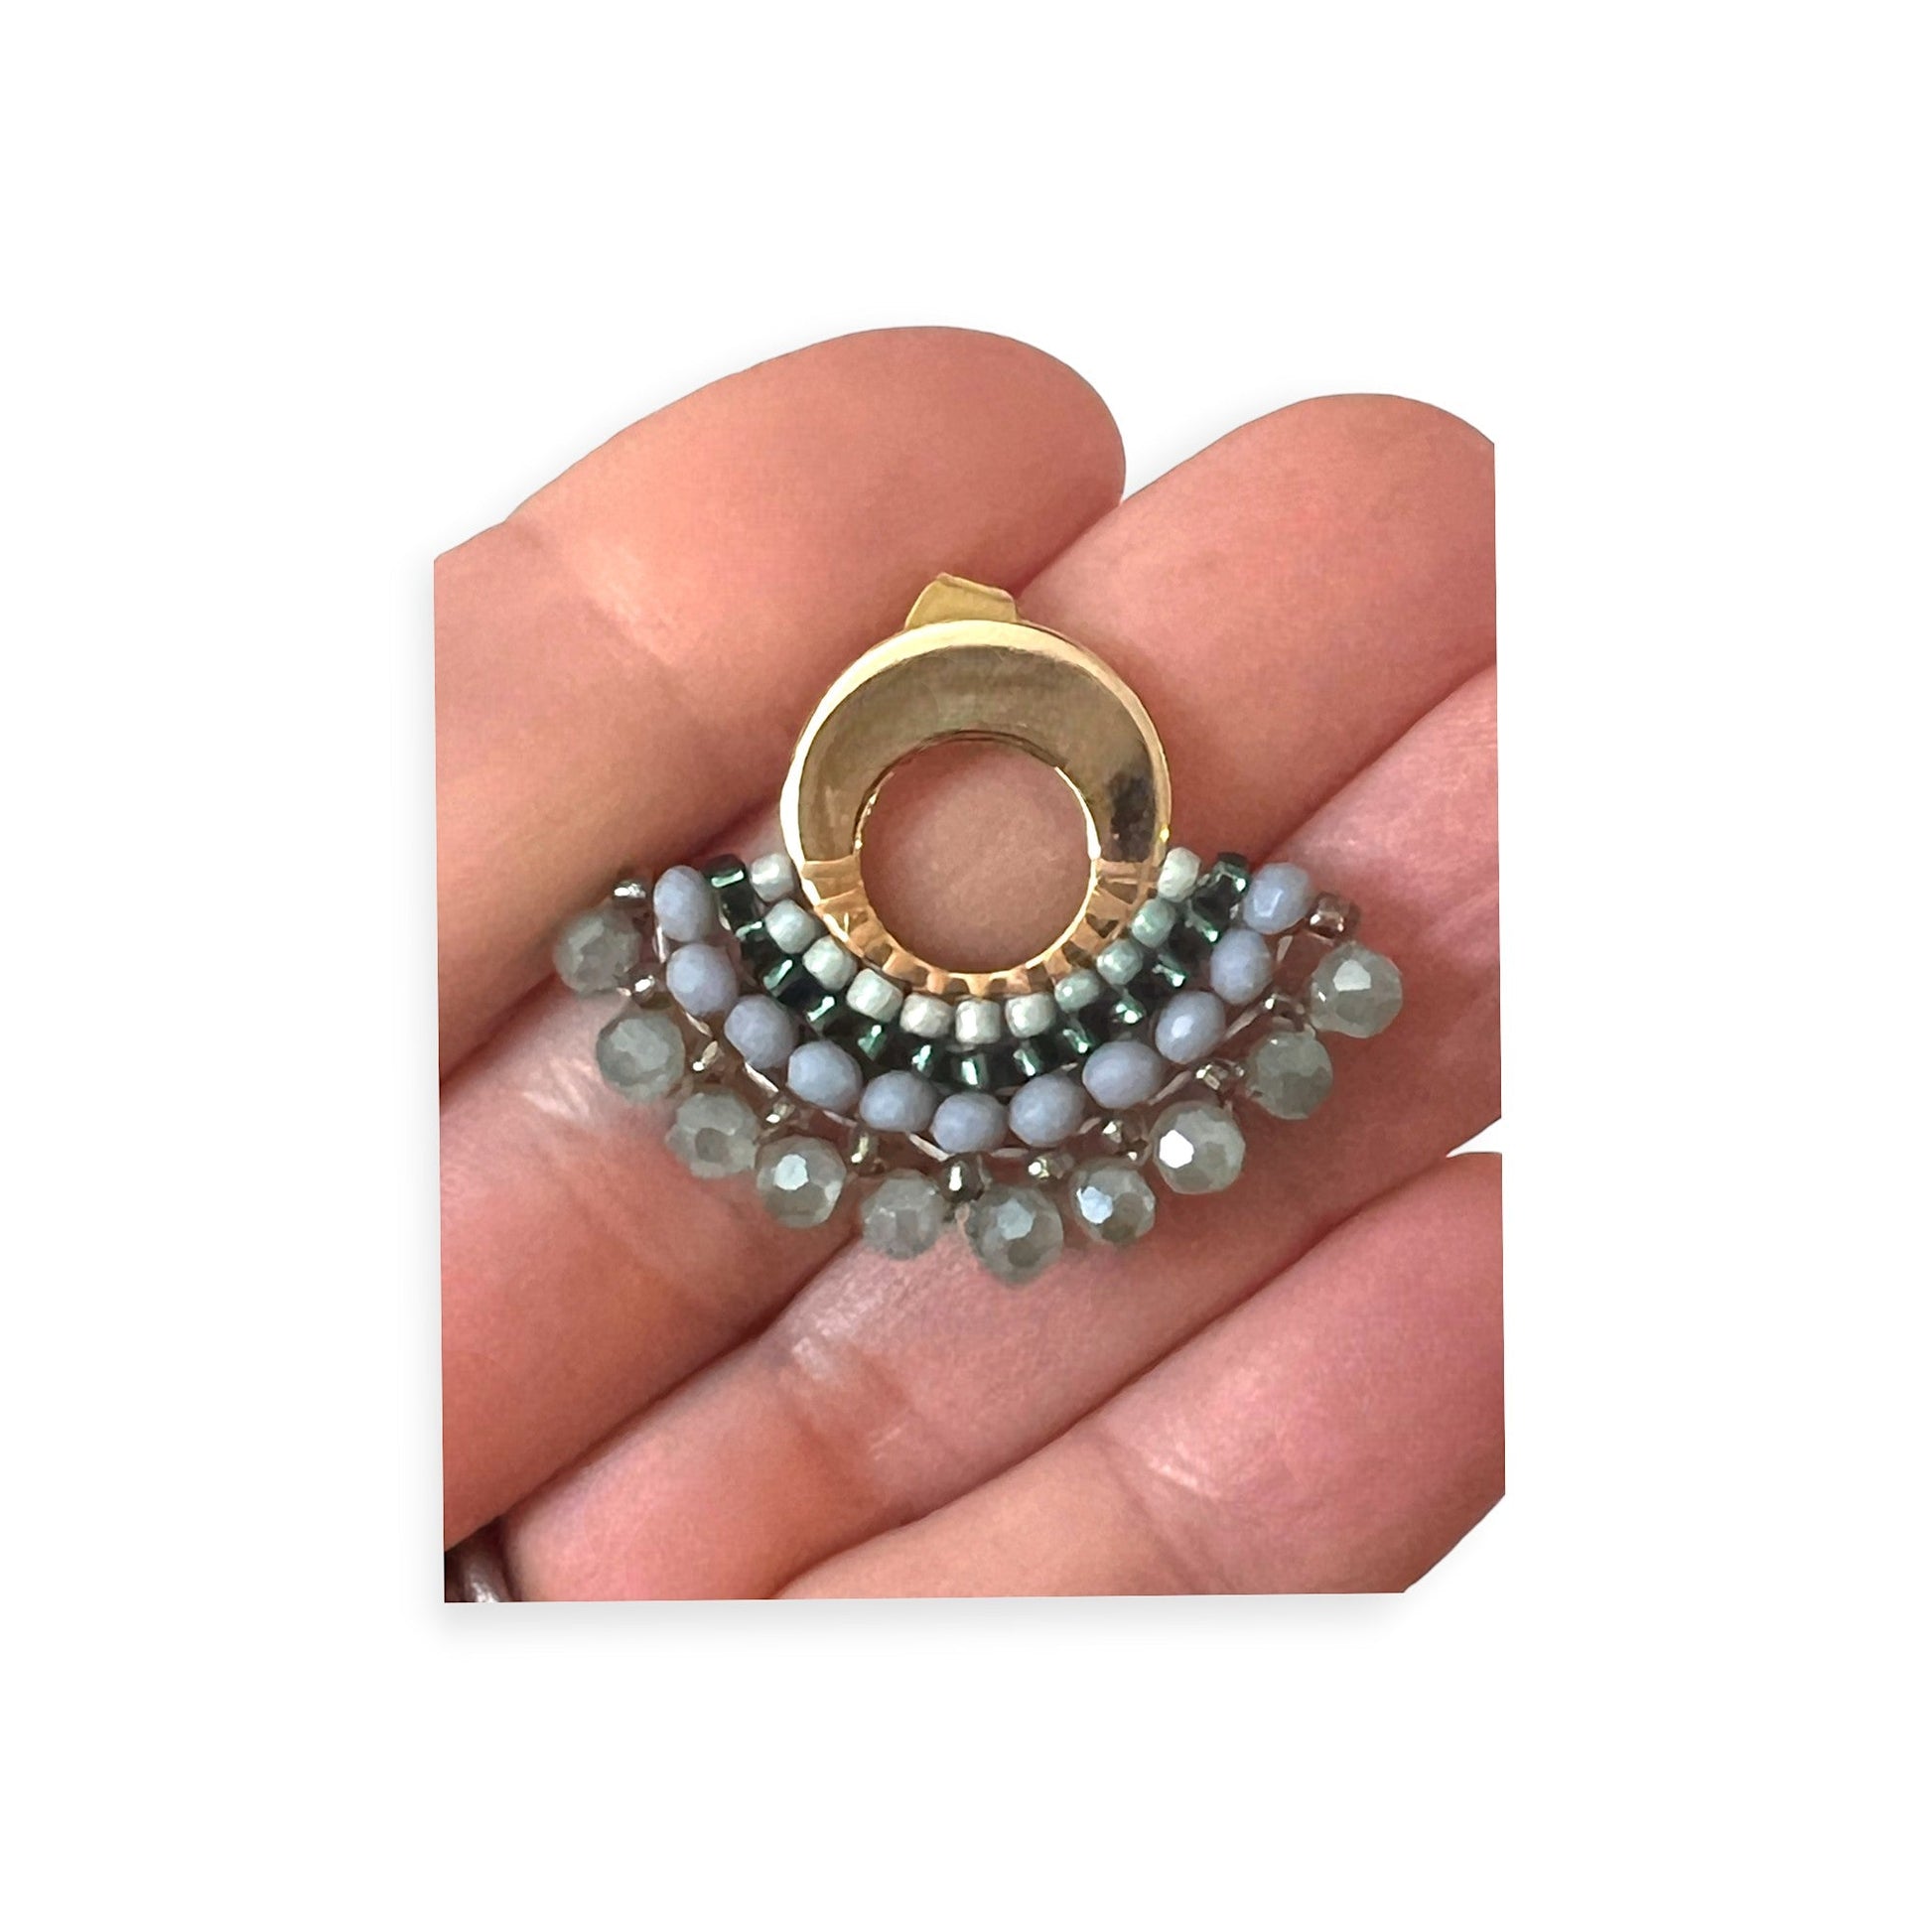 Colorful beaded fan earrings - Sundara Joon